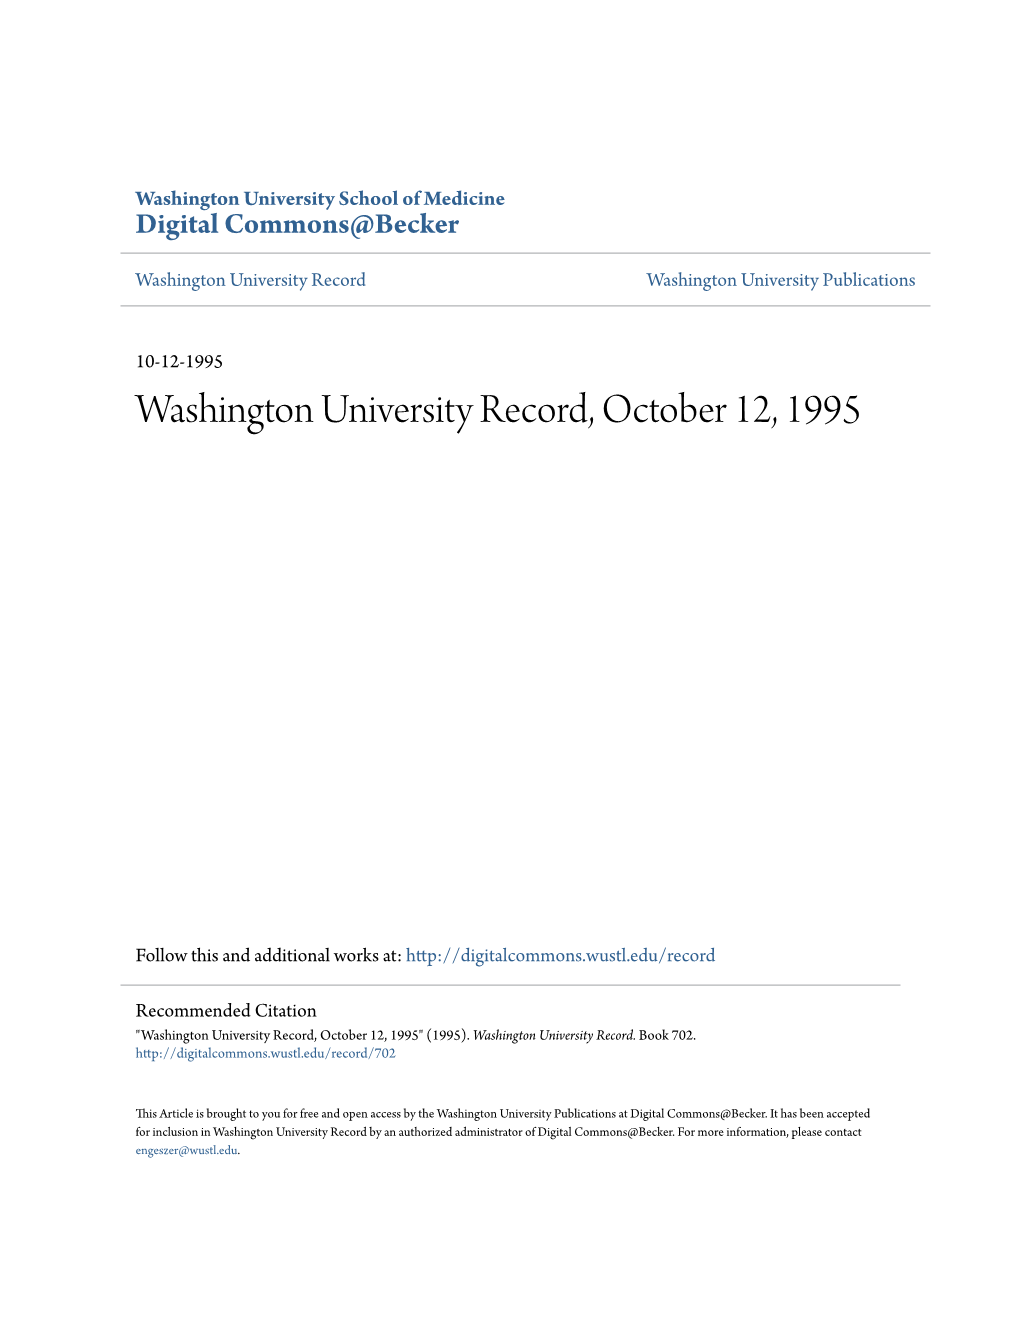 Washington University Record, October 12, 1995